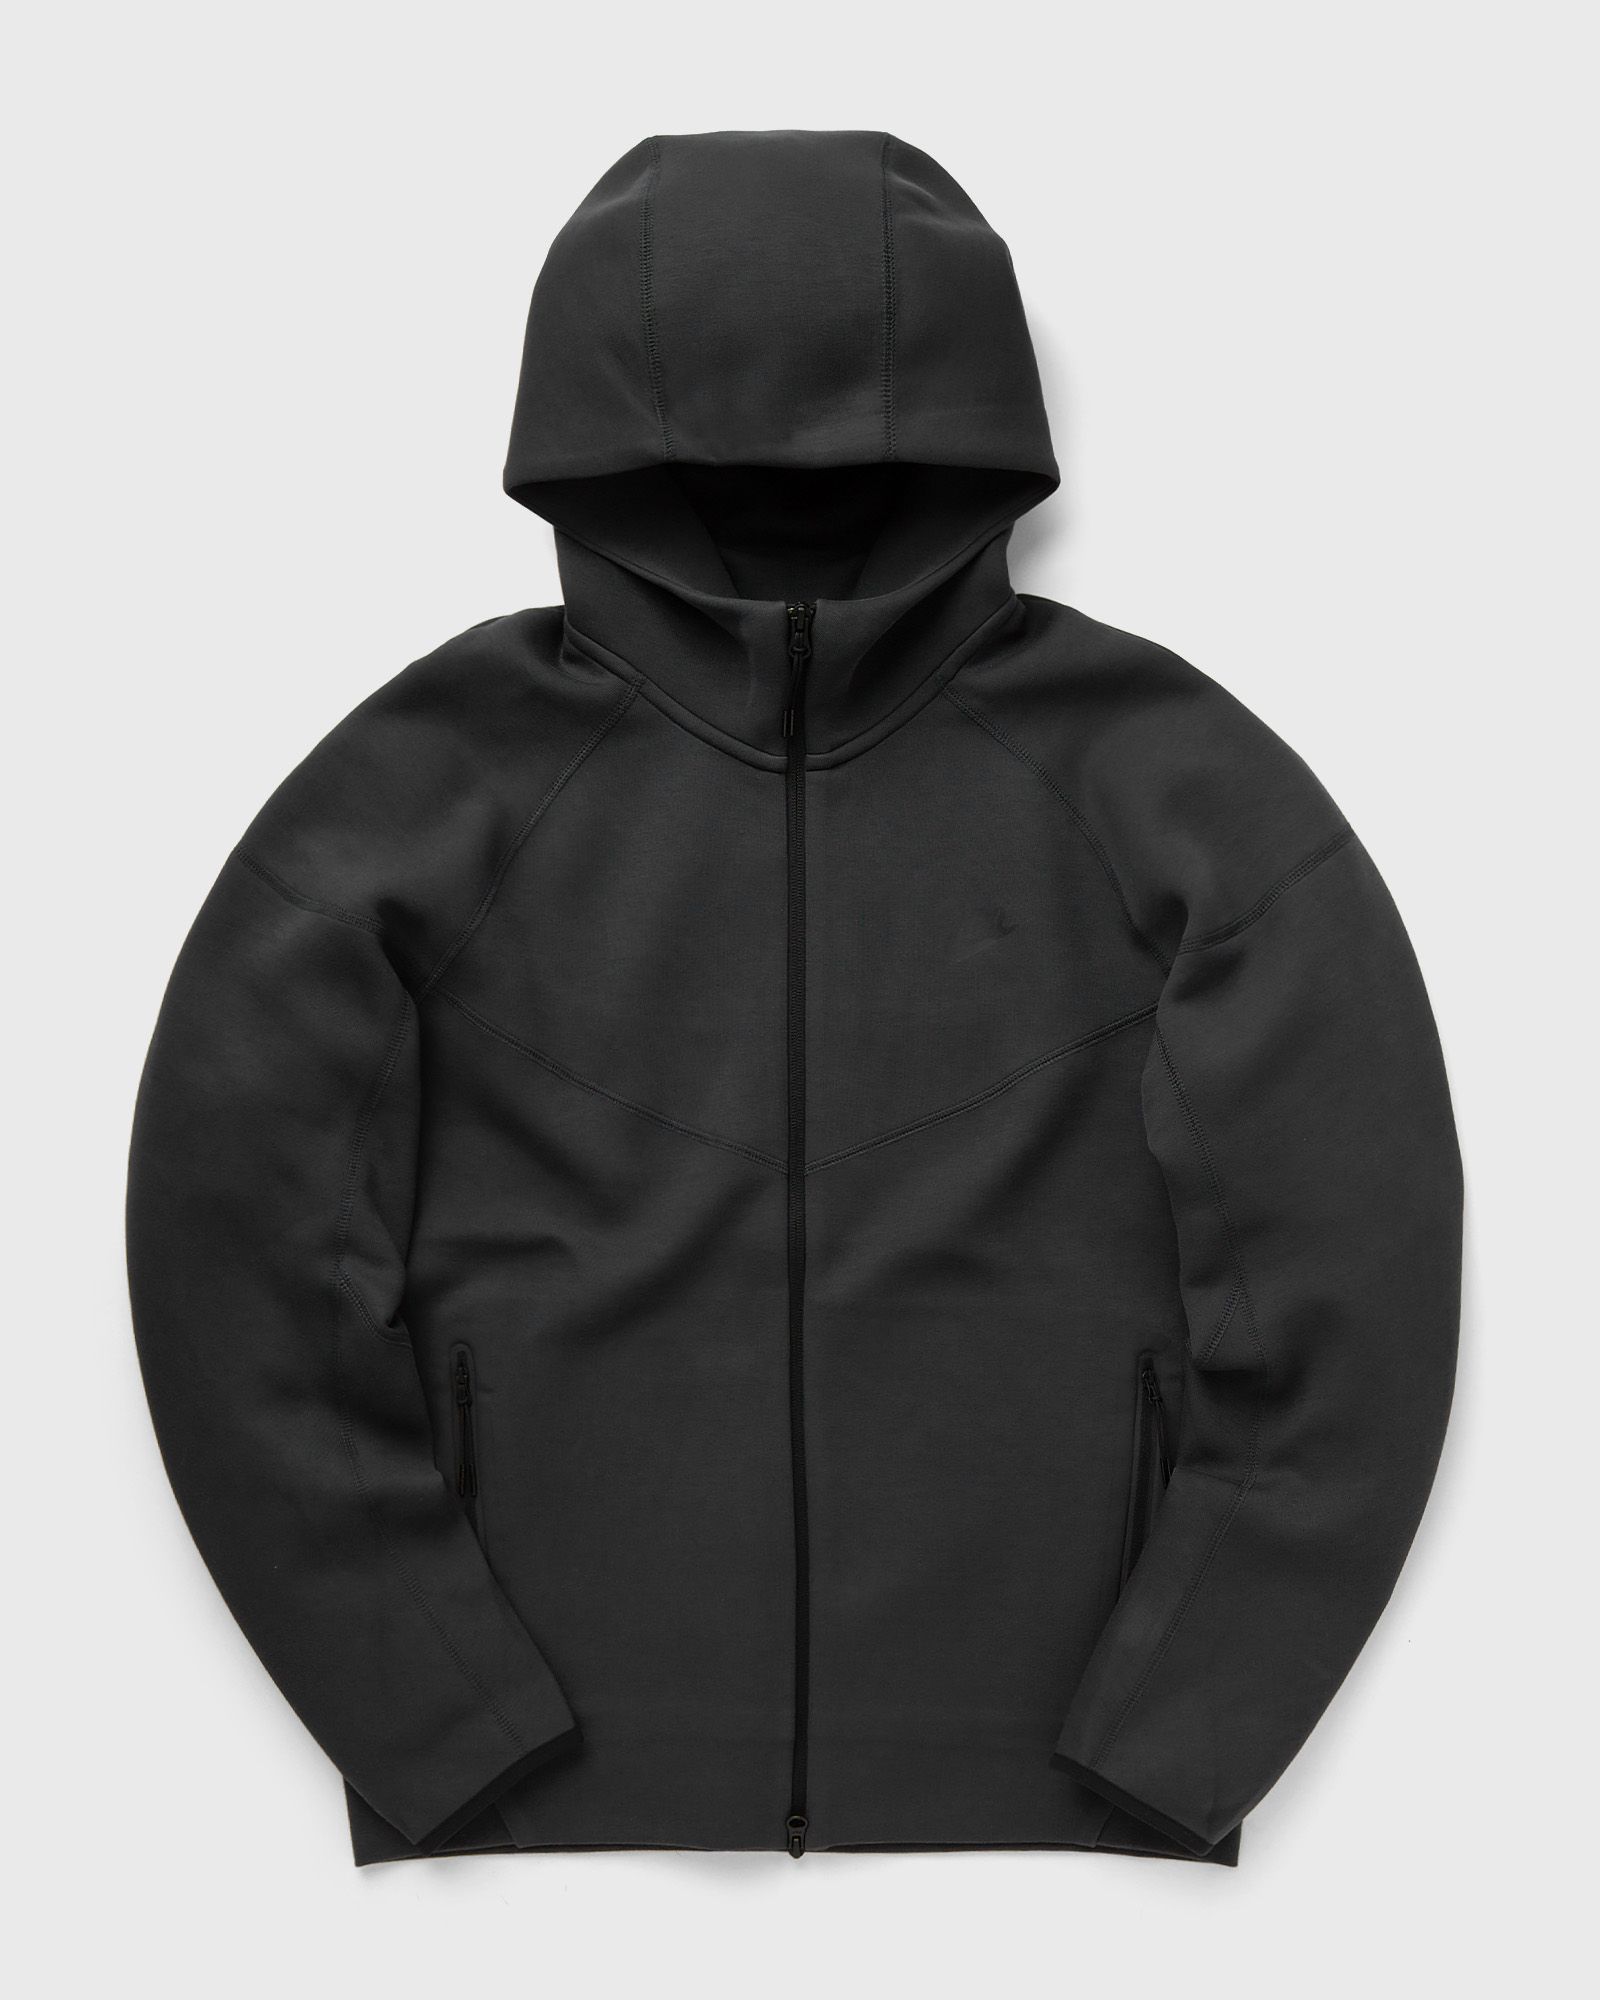 Nike - tech fleece windrunner full-zip hoodie men hoodies|zippers black in größe:xxl